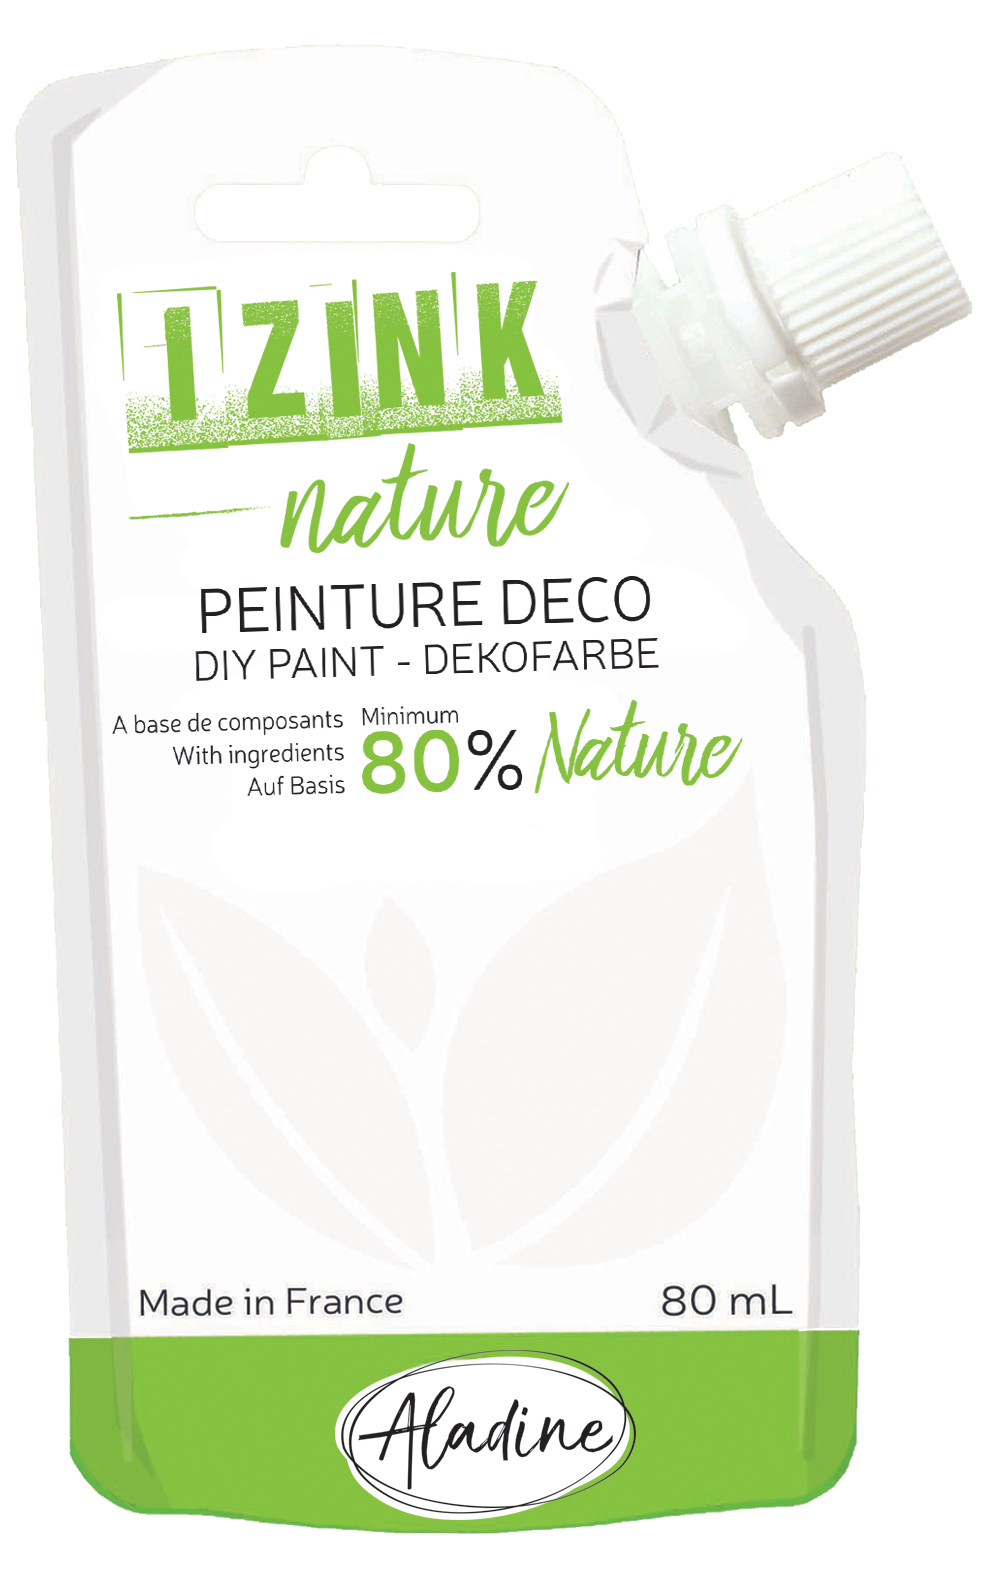 Izink Nature - Natural Deco Paint - Blanc (White) 80ml